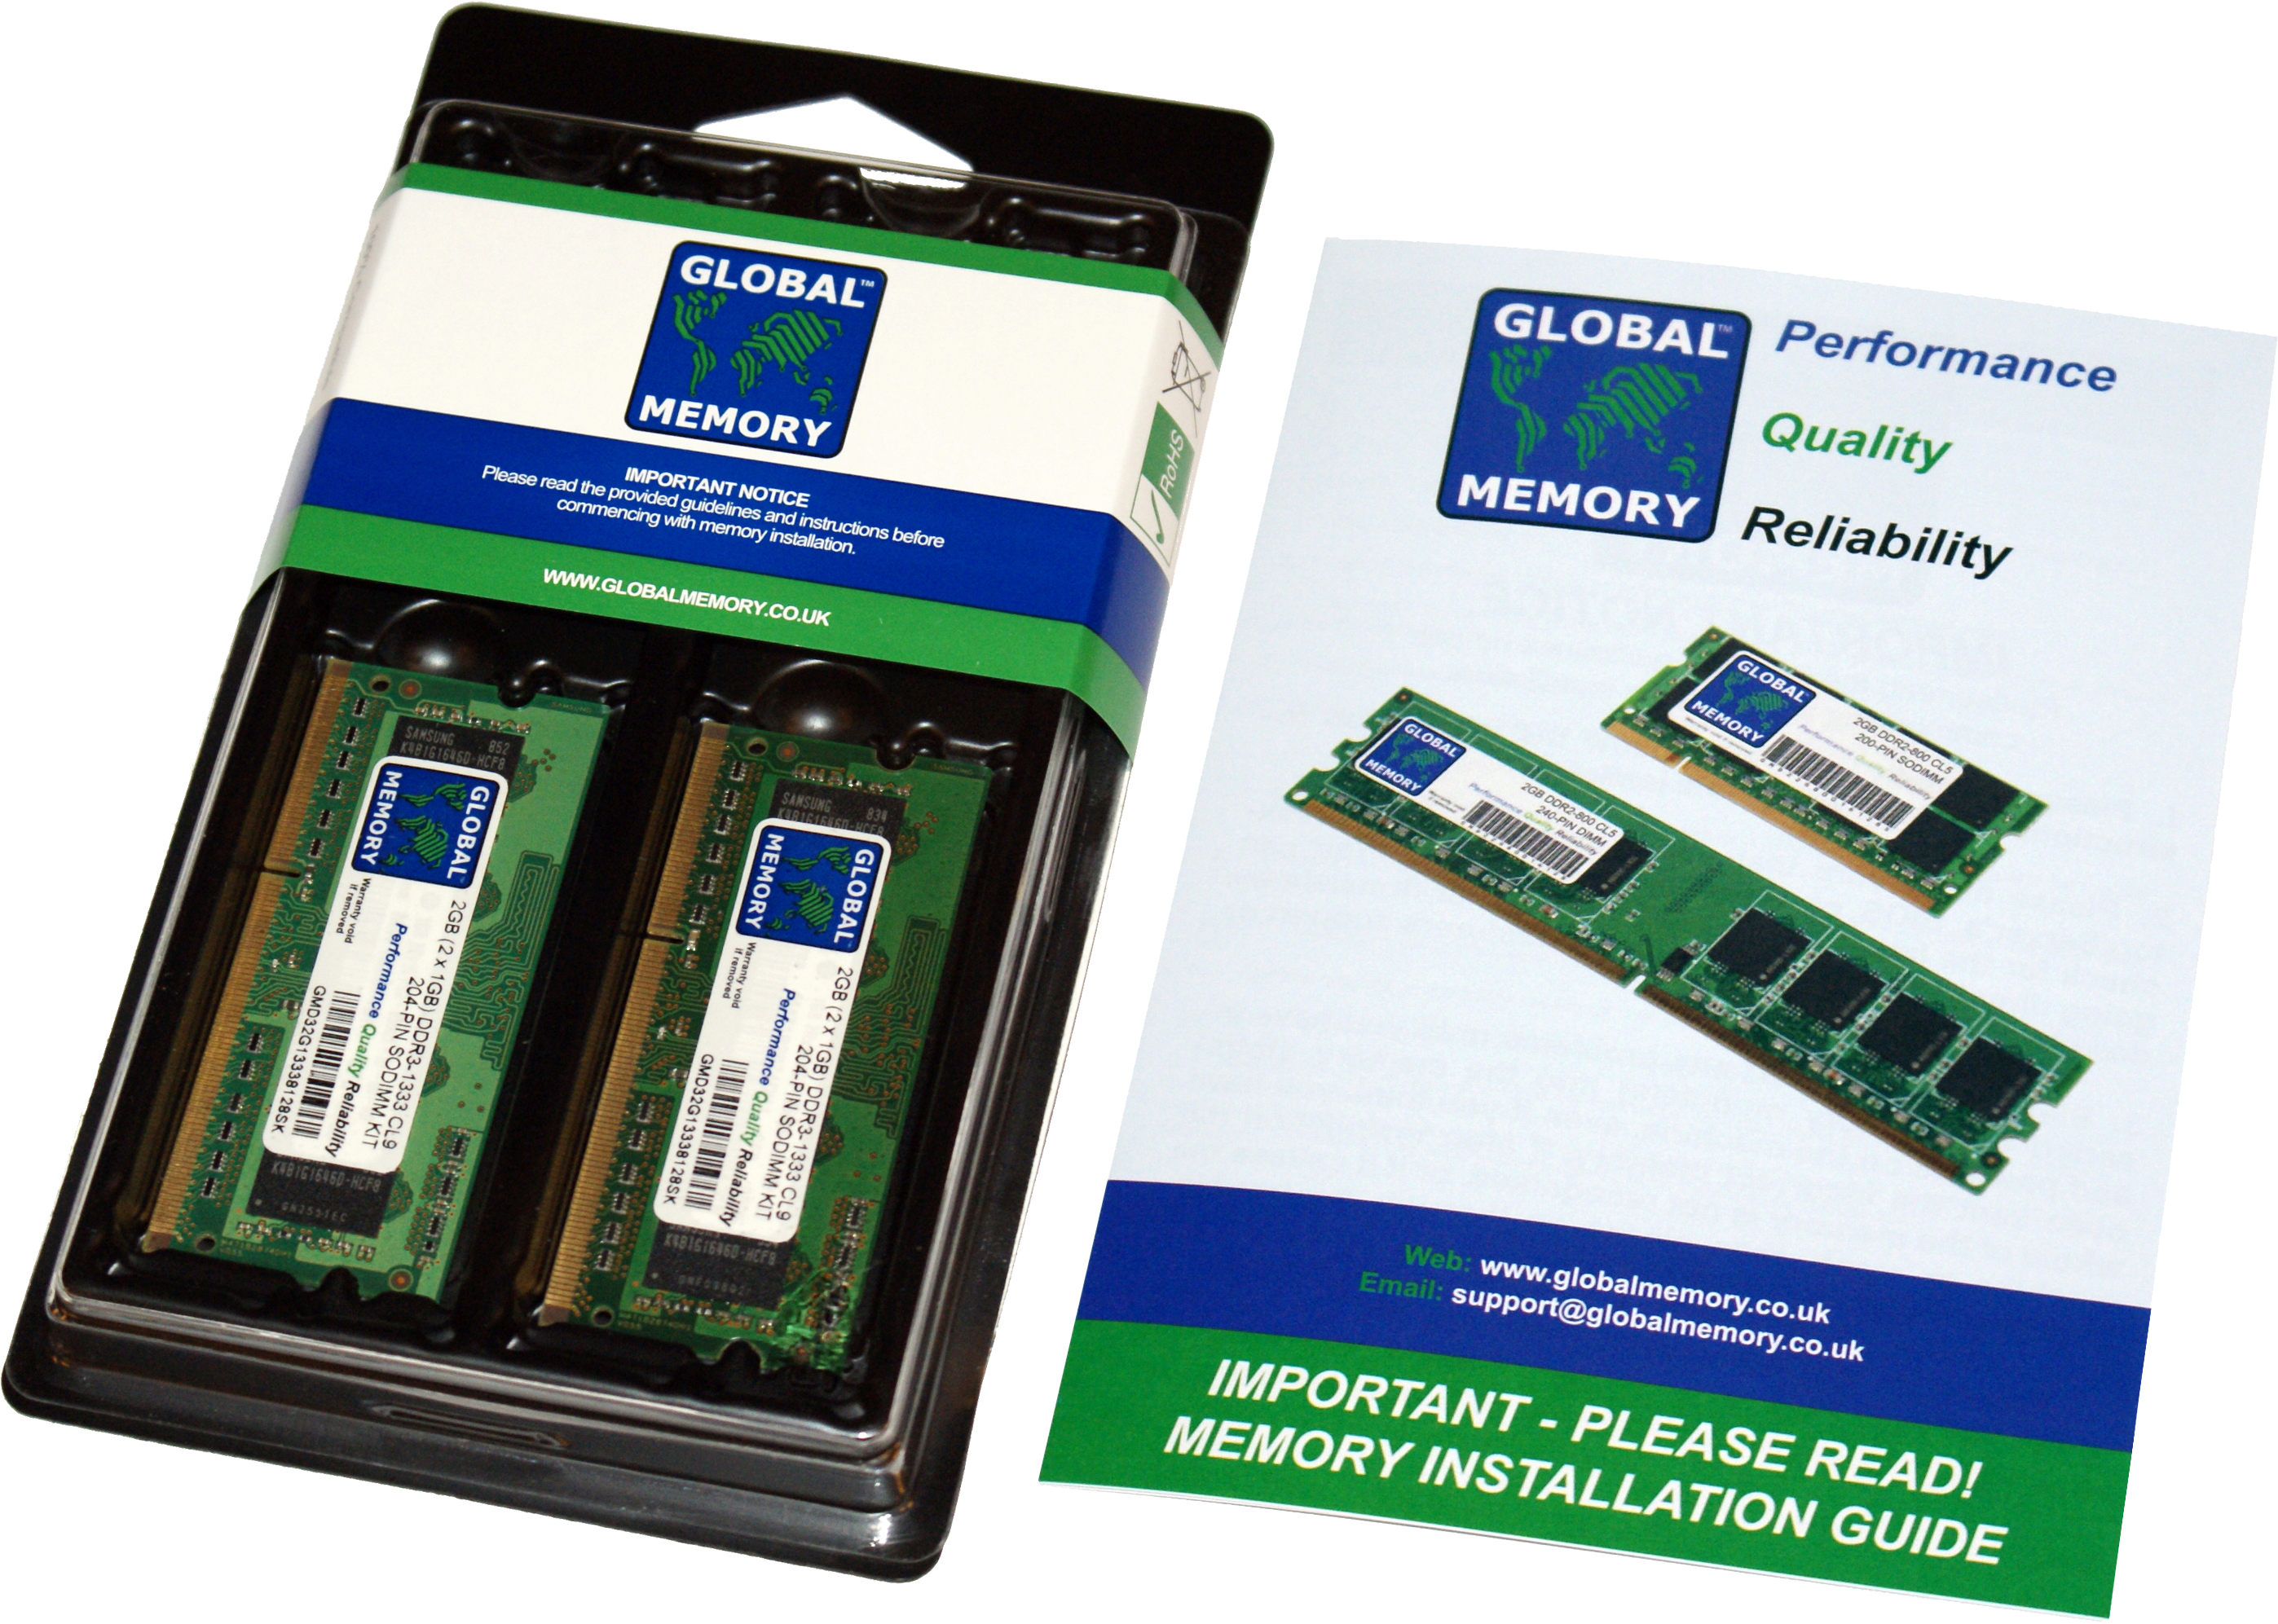 8GB (2 x 4GB) DDR4 2400MHz PC4-19200 260-PIN SODIMM MEMORY RAM KIT FOR SAMSUNG LAPTOPS/NOTEBOOKS